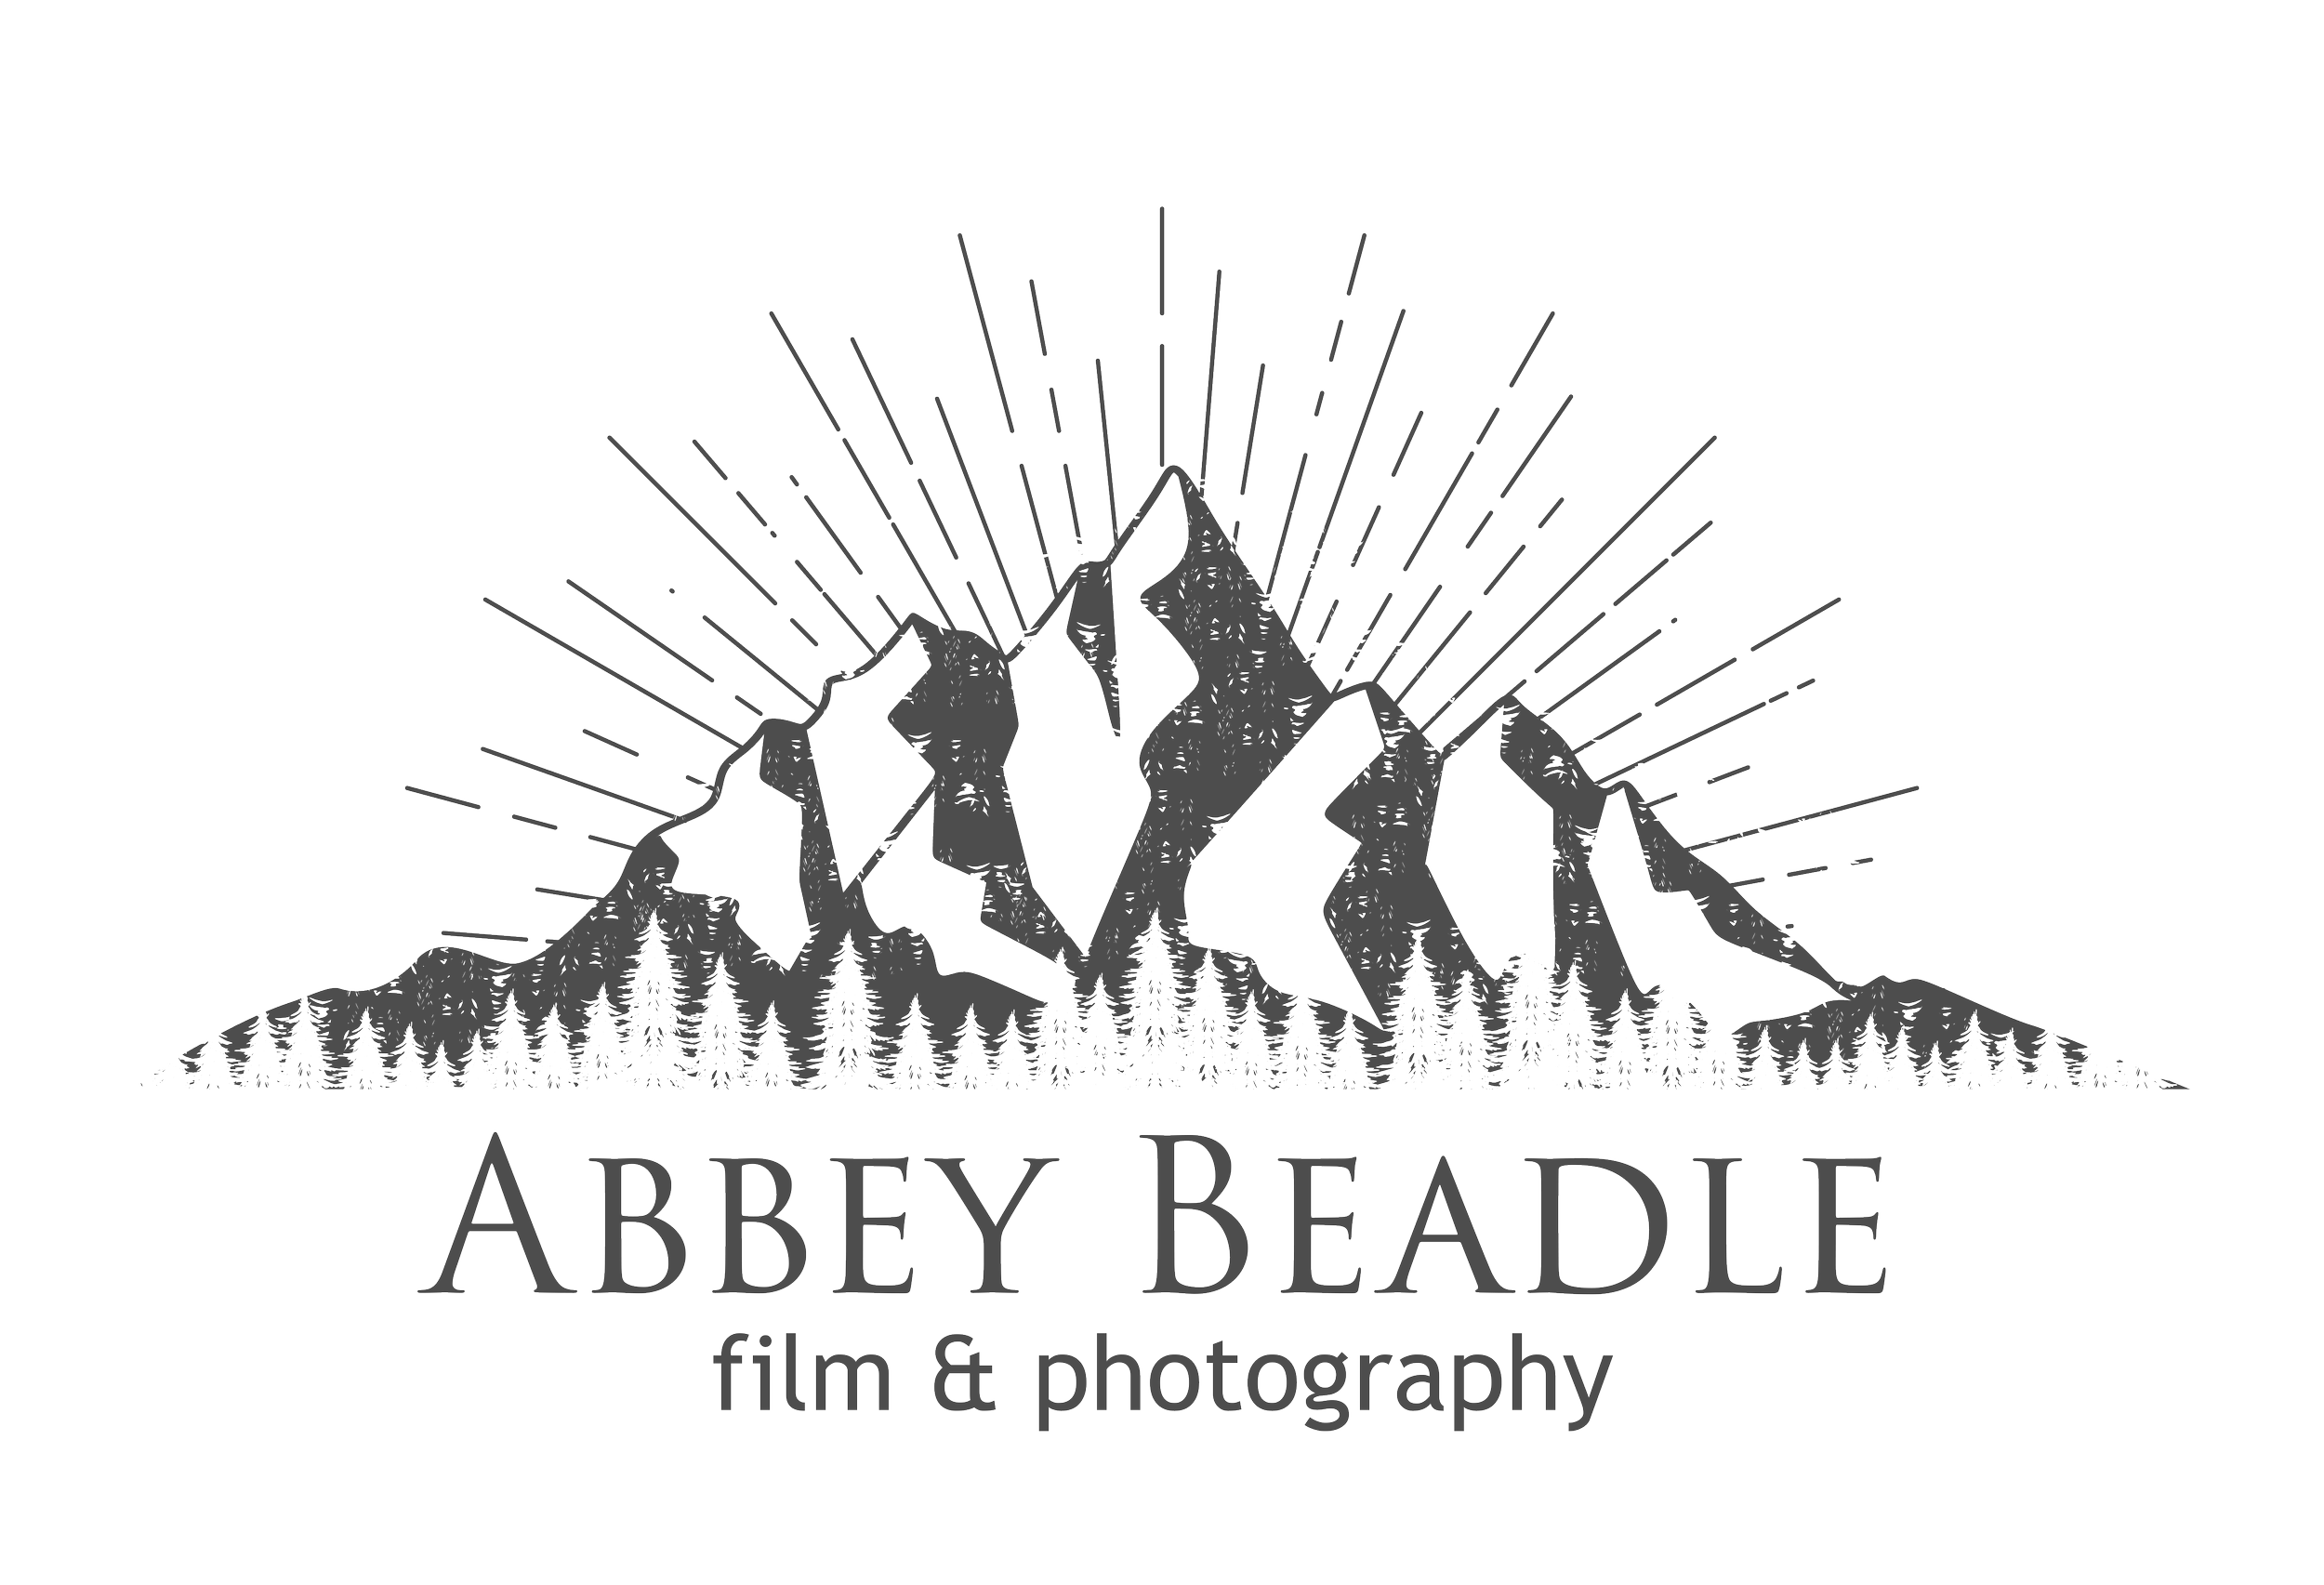 Abbey Beadle Film & Photography